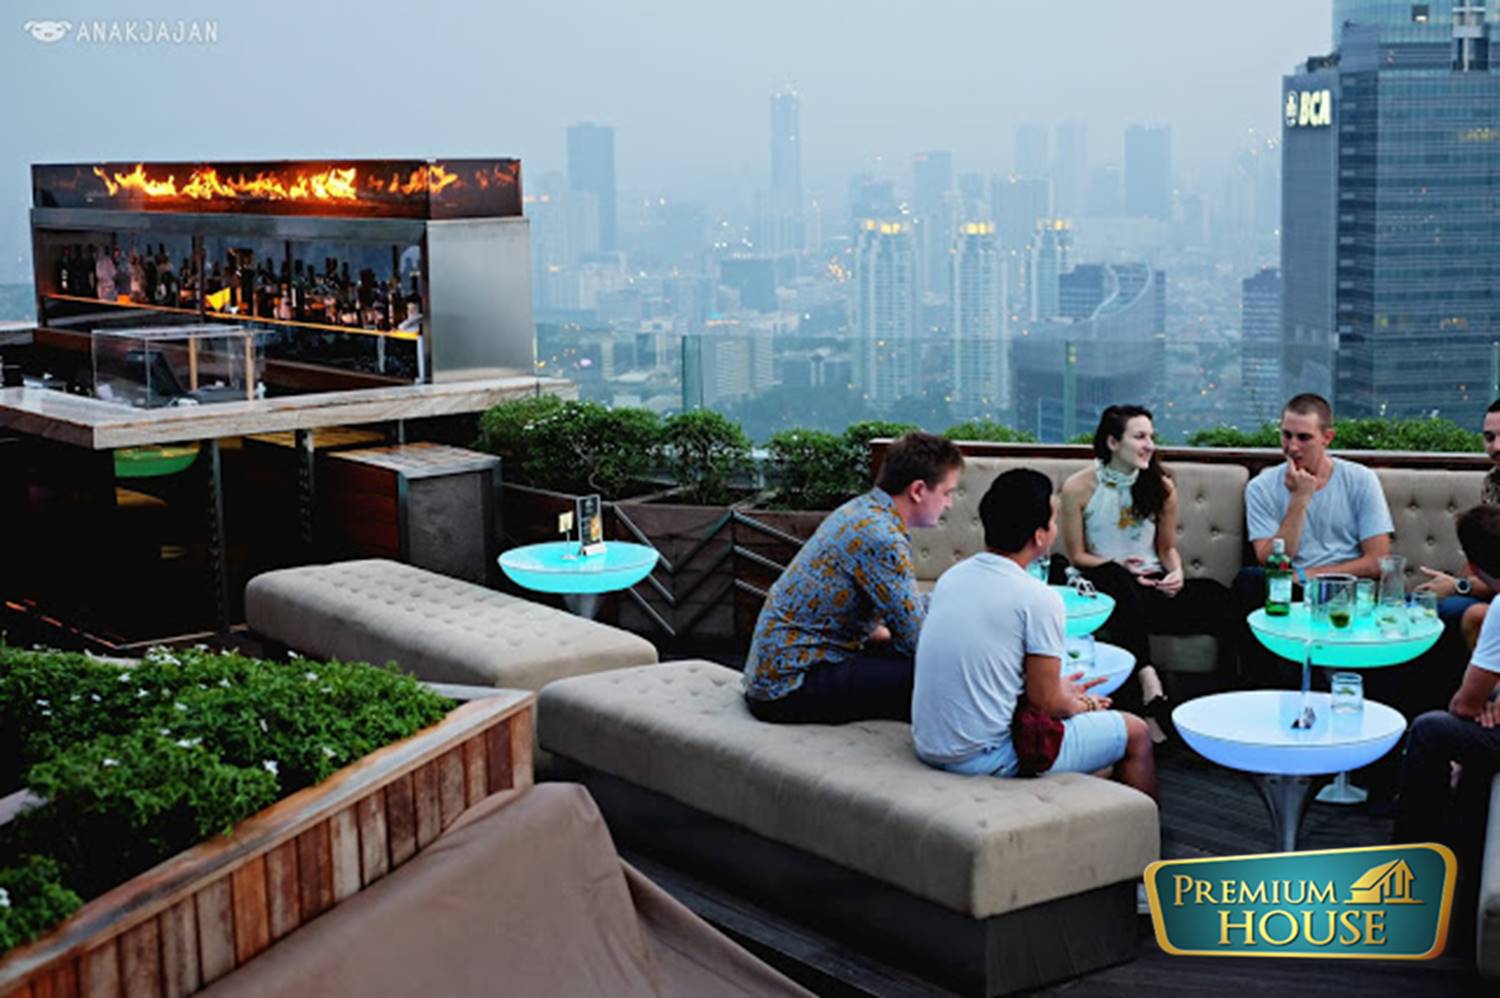 Premium House: Cloud Longue and Living Room Jakarta | Hangout